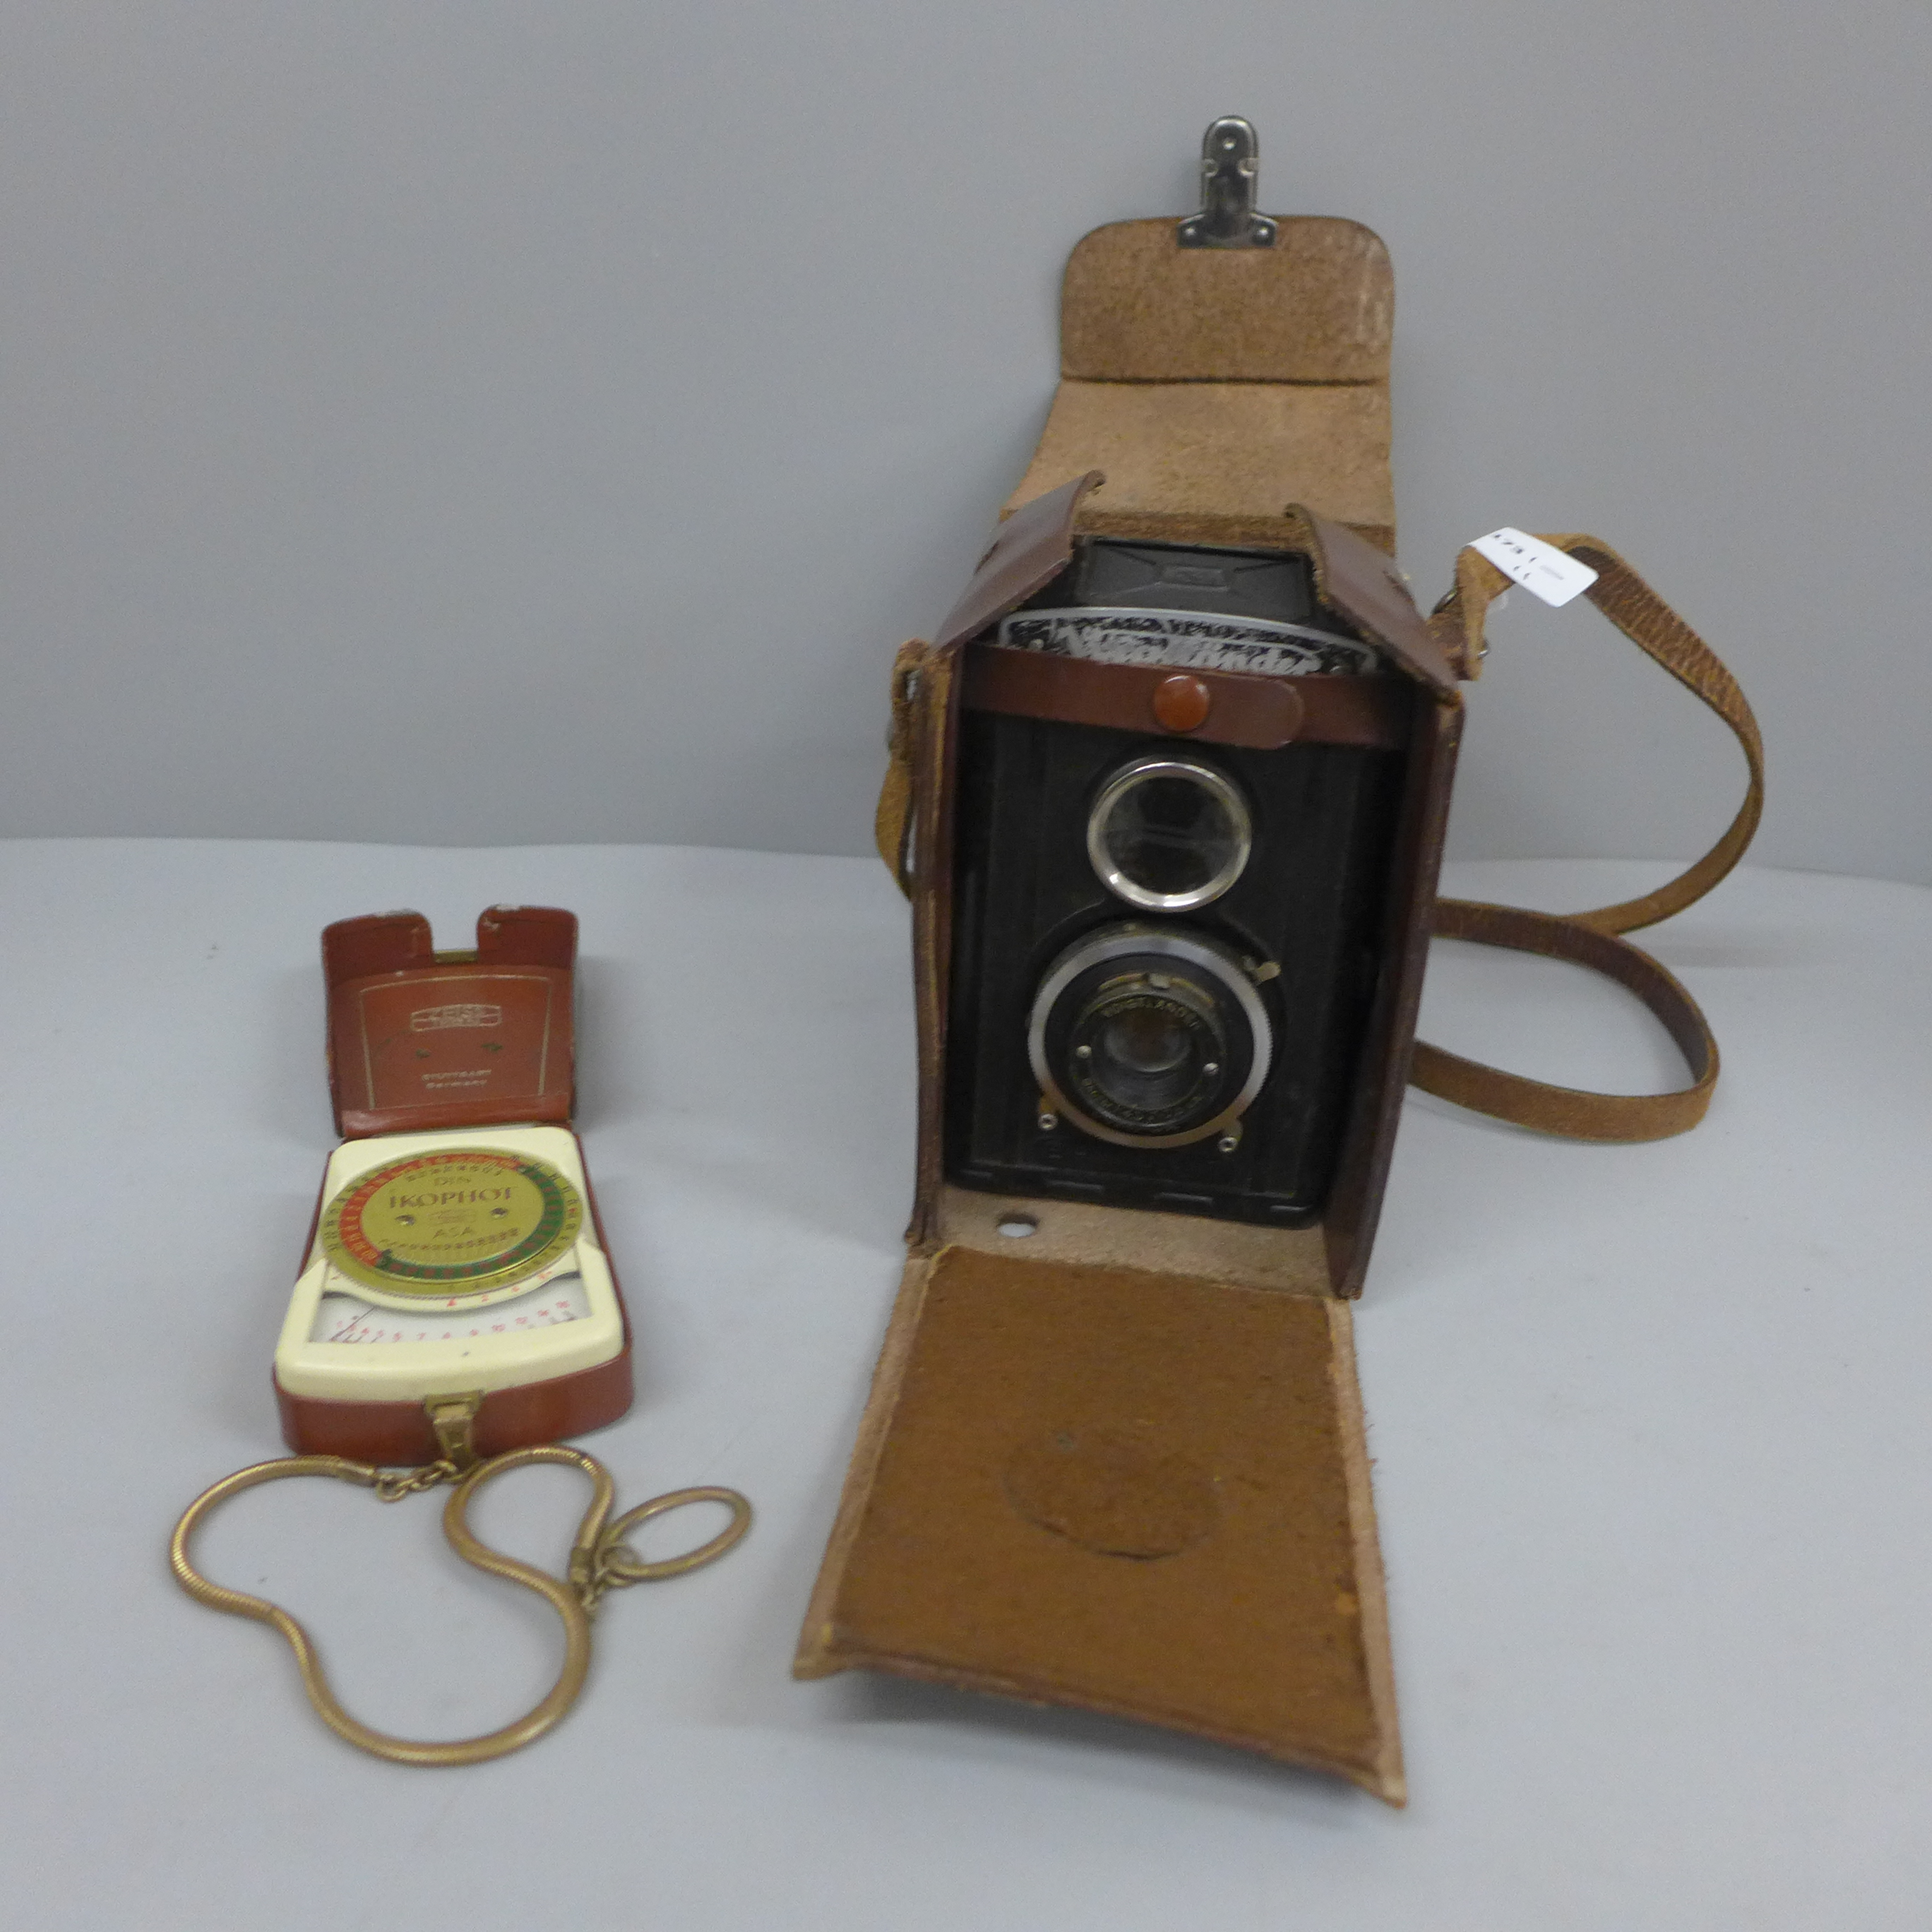 A Voigtlander camera and Zeiss Ikon light meter